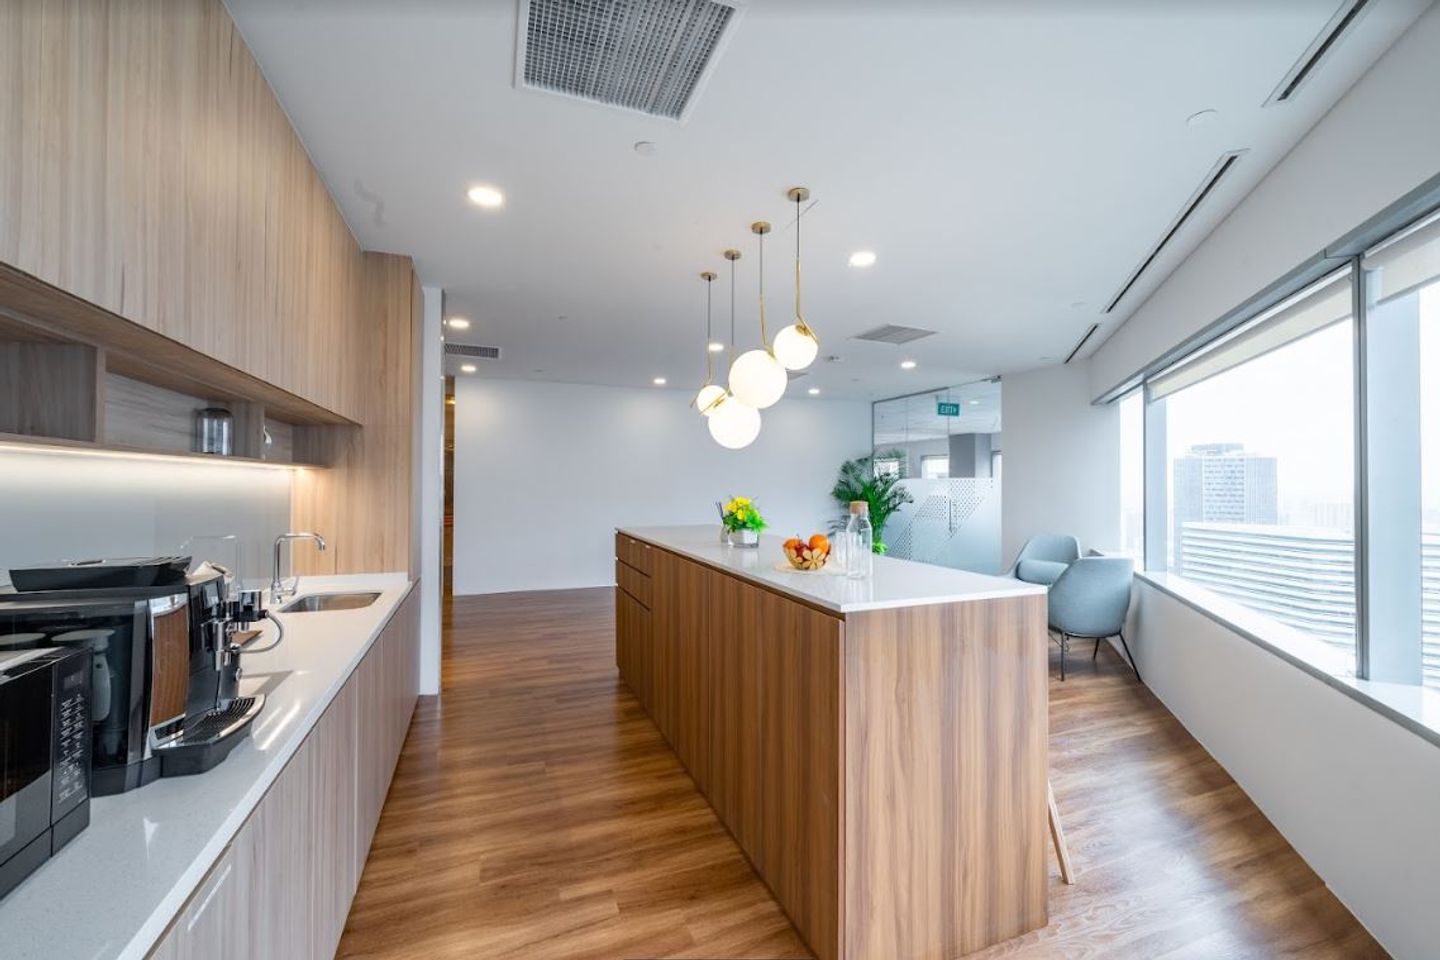 Spacious Modern Kitchen Cabinet Design With Island